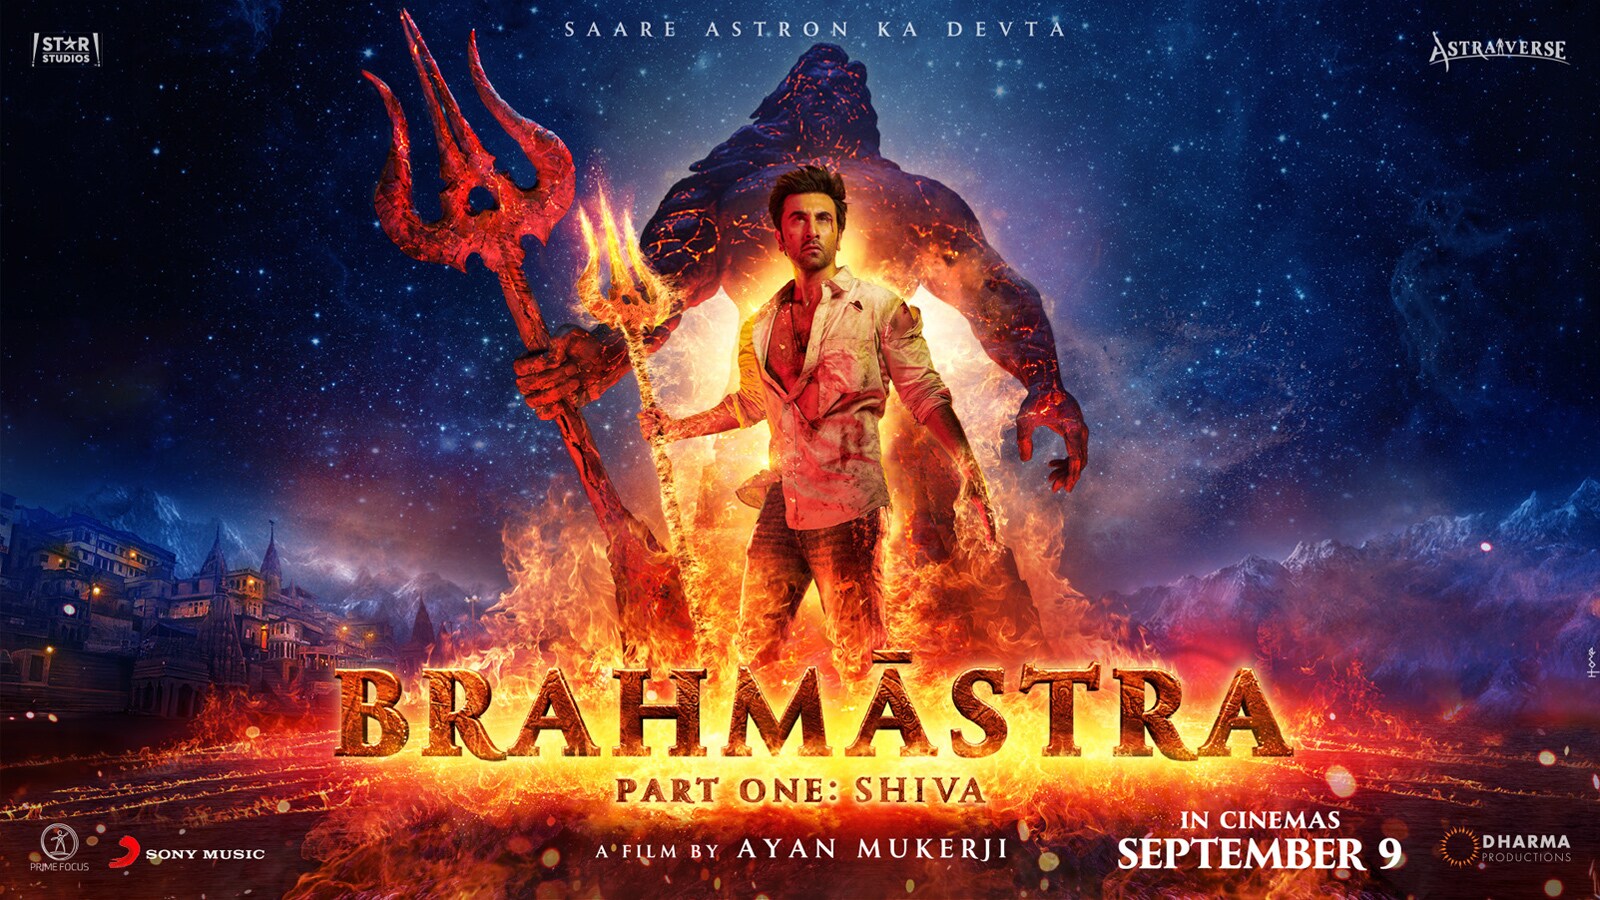 Brahmastra - Featured Content Banner - SG